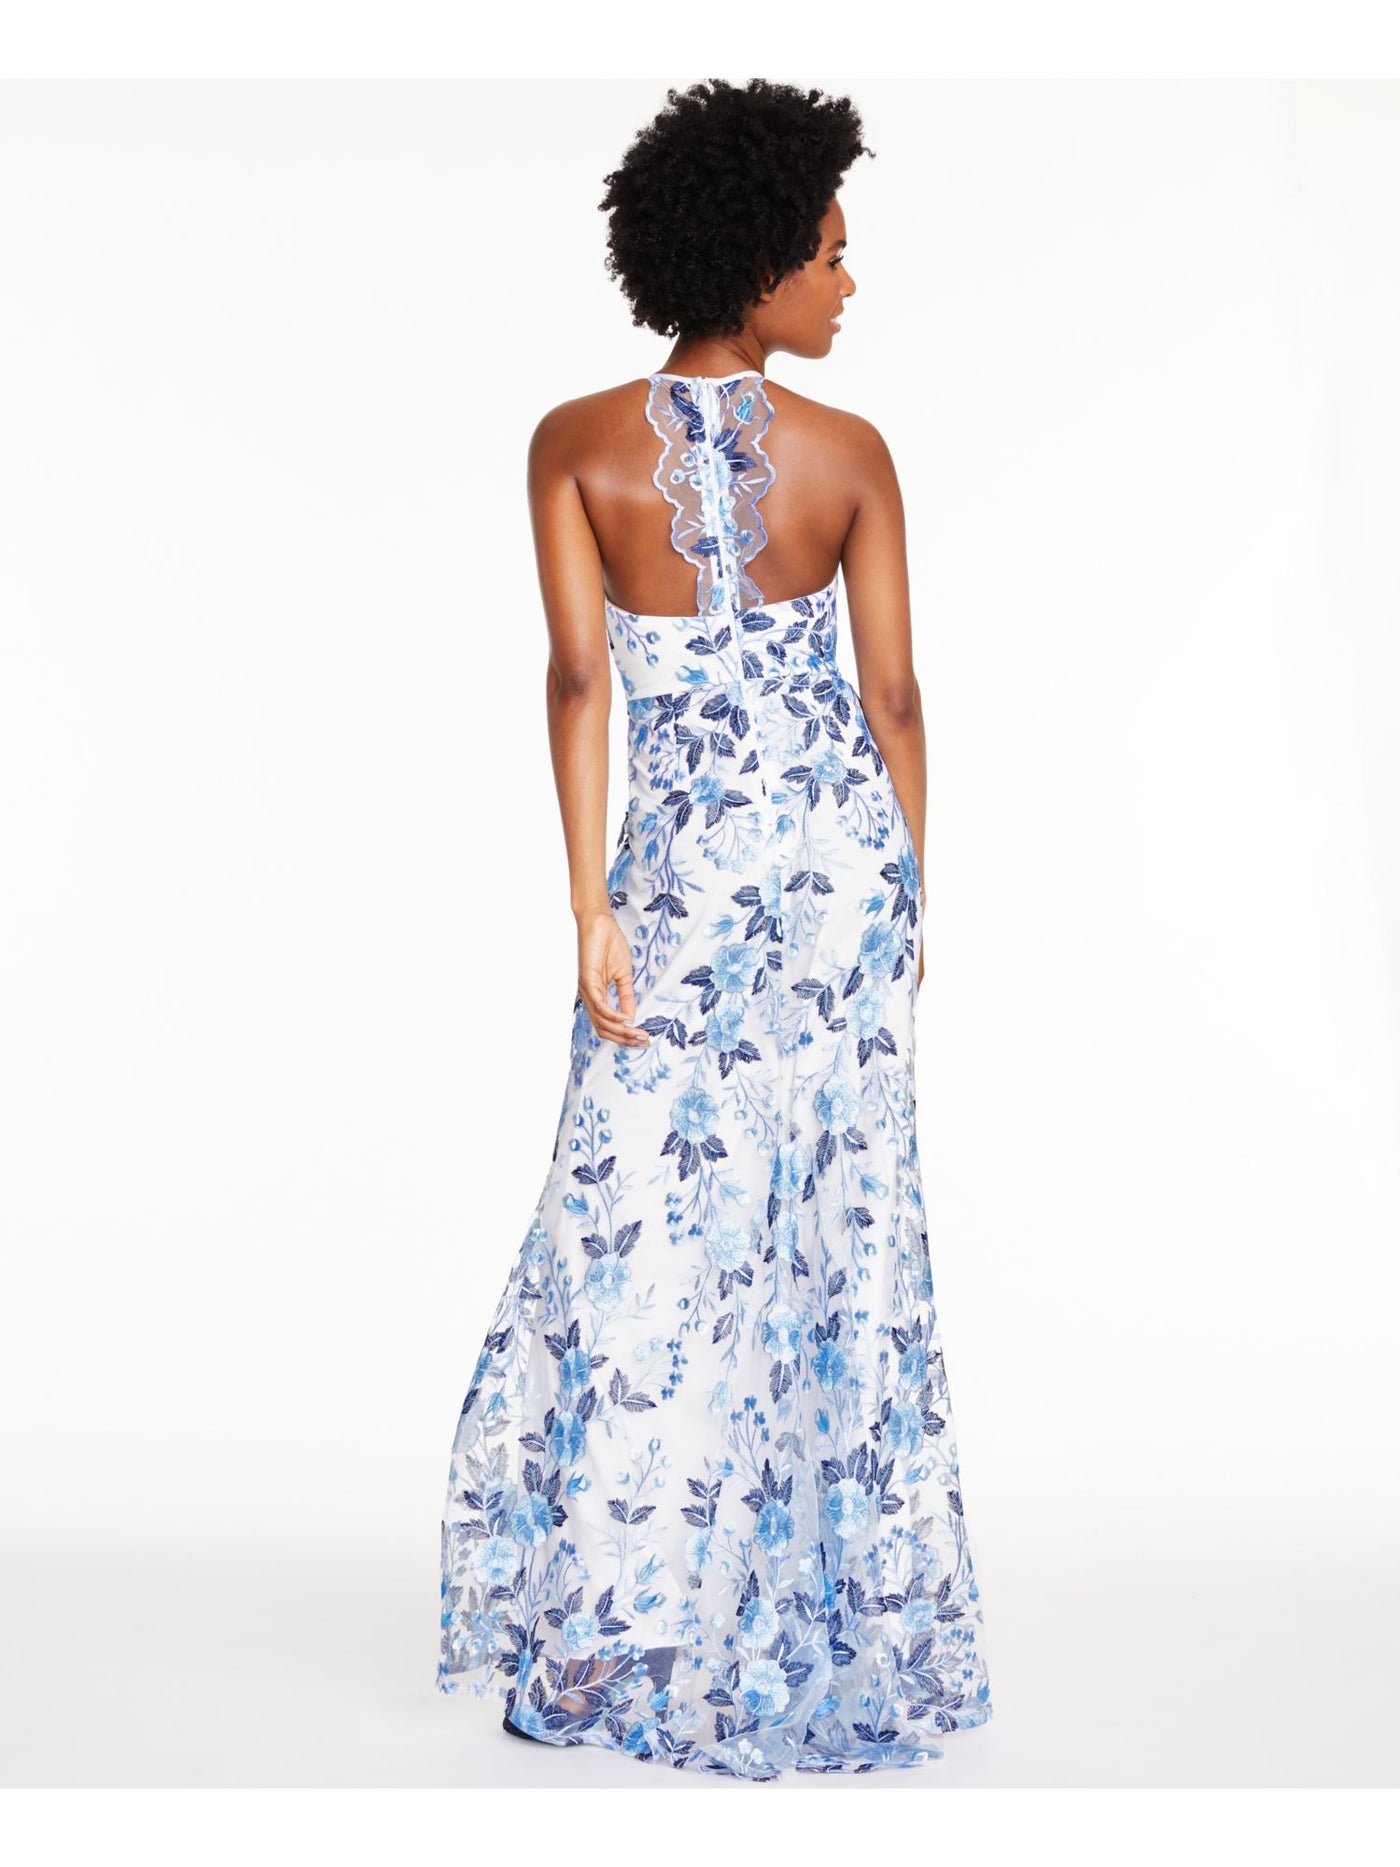 SEQUIN HEARTS Womens Blue Sheer Floral Sleeveless Halter Full-Length Formal Fit + Flare Dress Petites 11